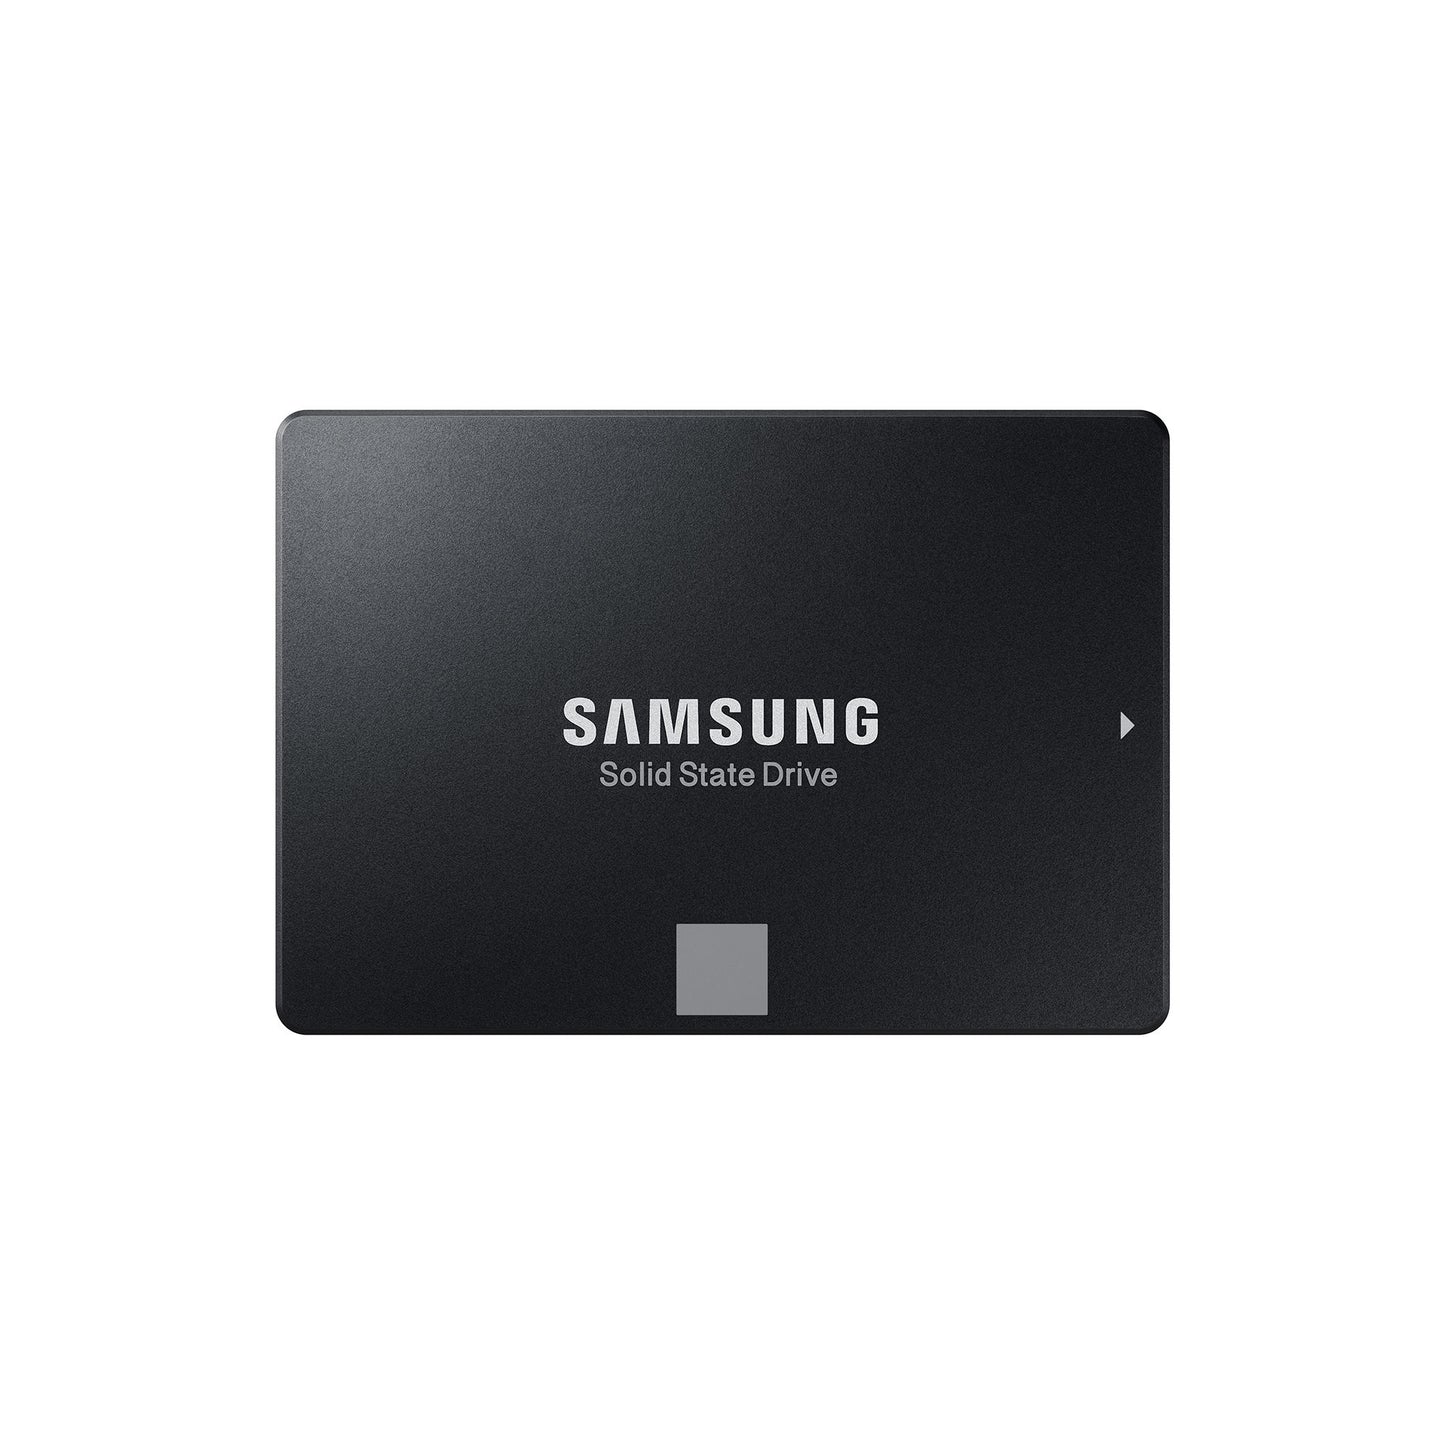 Samsung 860 EVO MZ-76E4T0B/AM 4 TB 2.5" Internal Solid State Drive - SATA